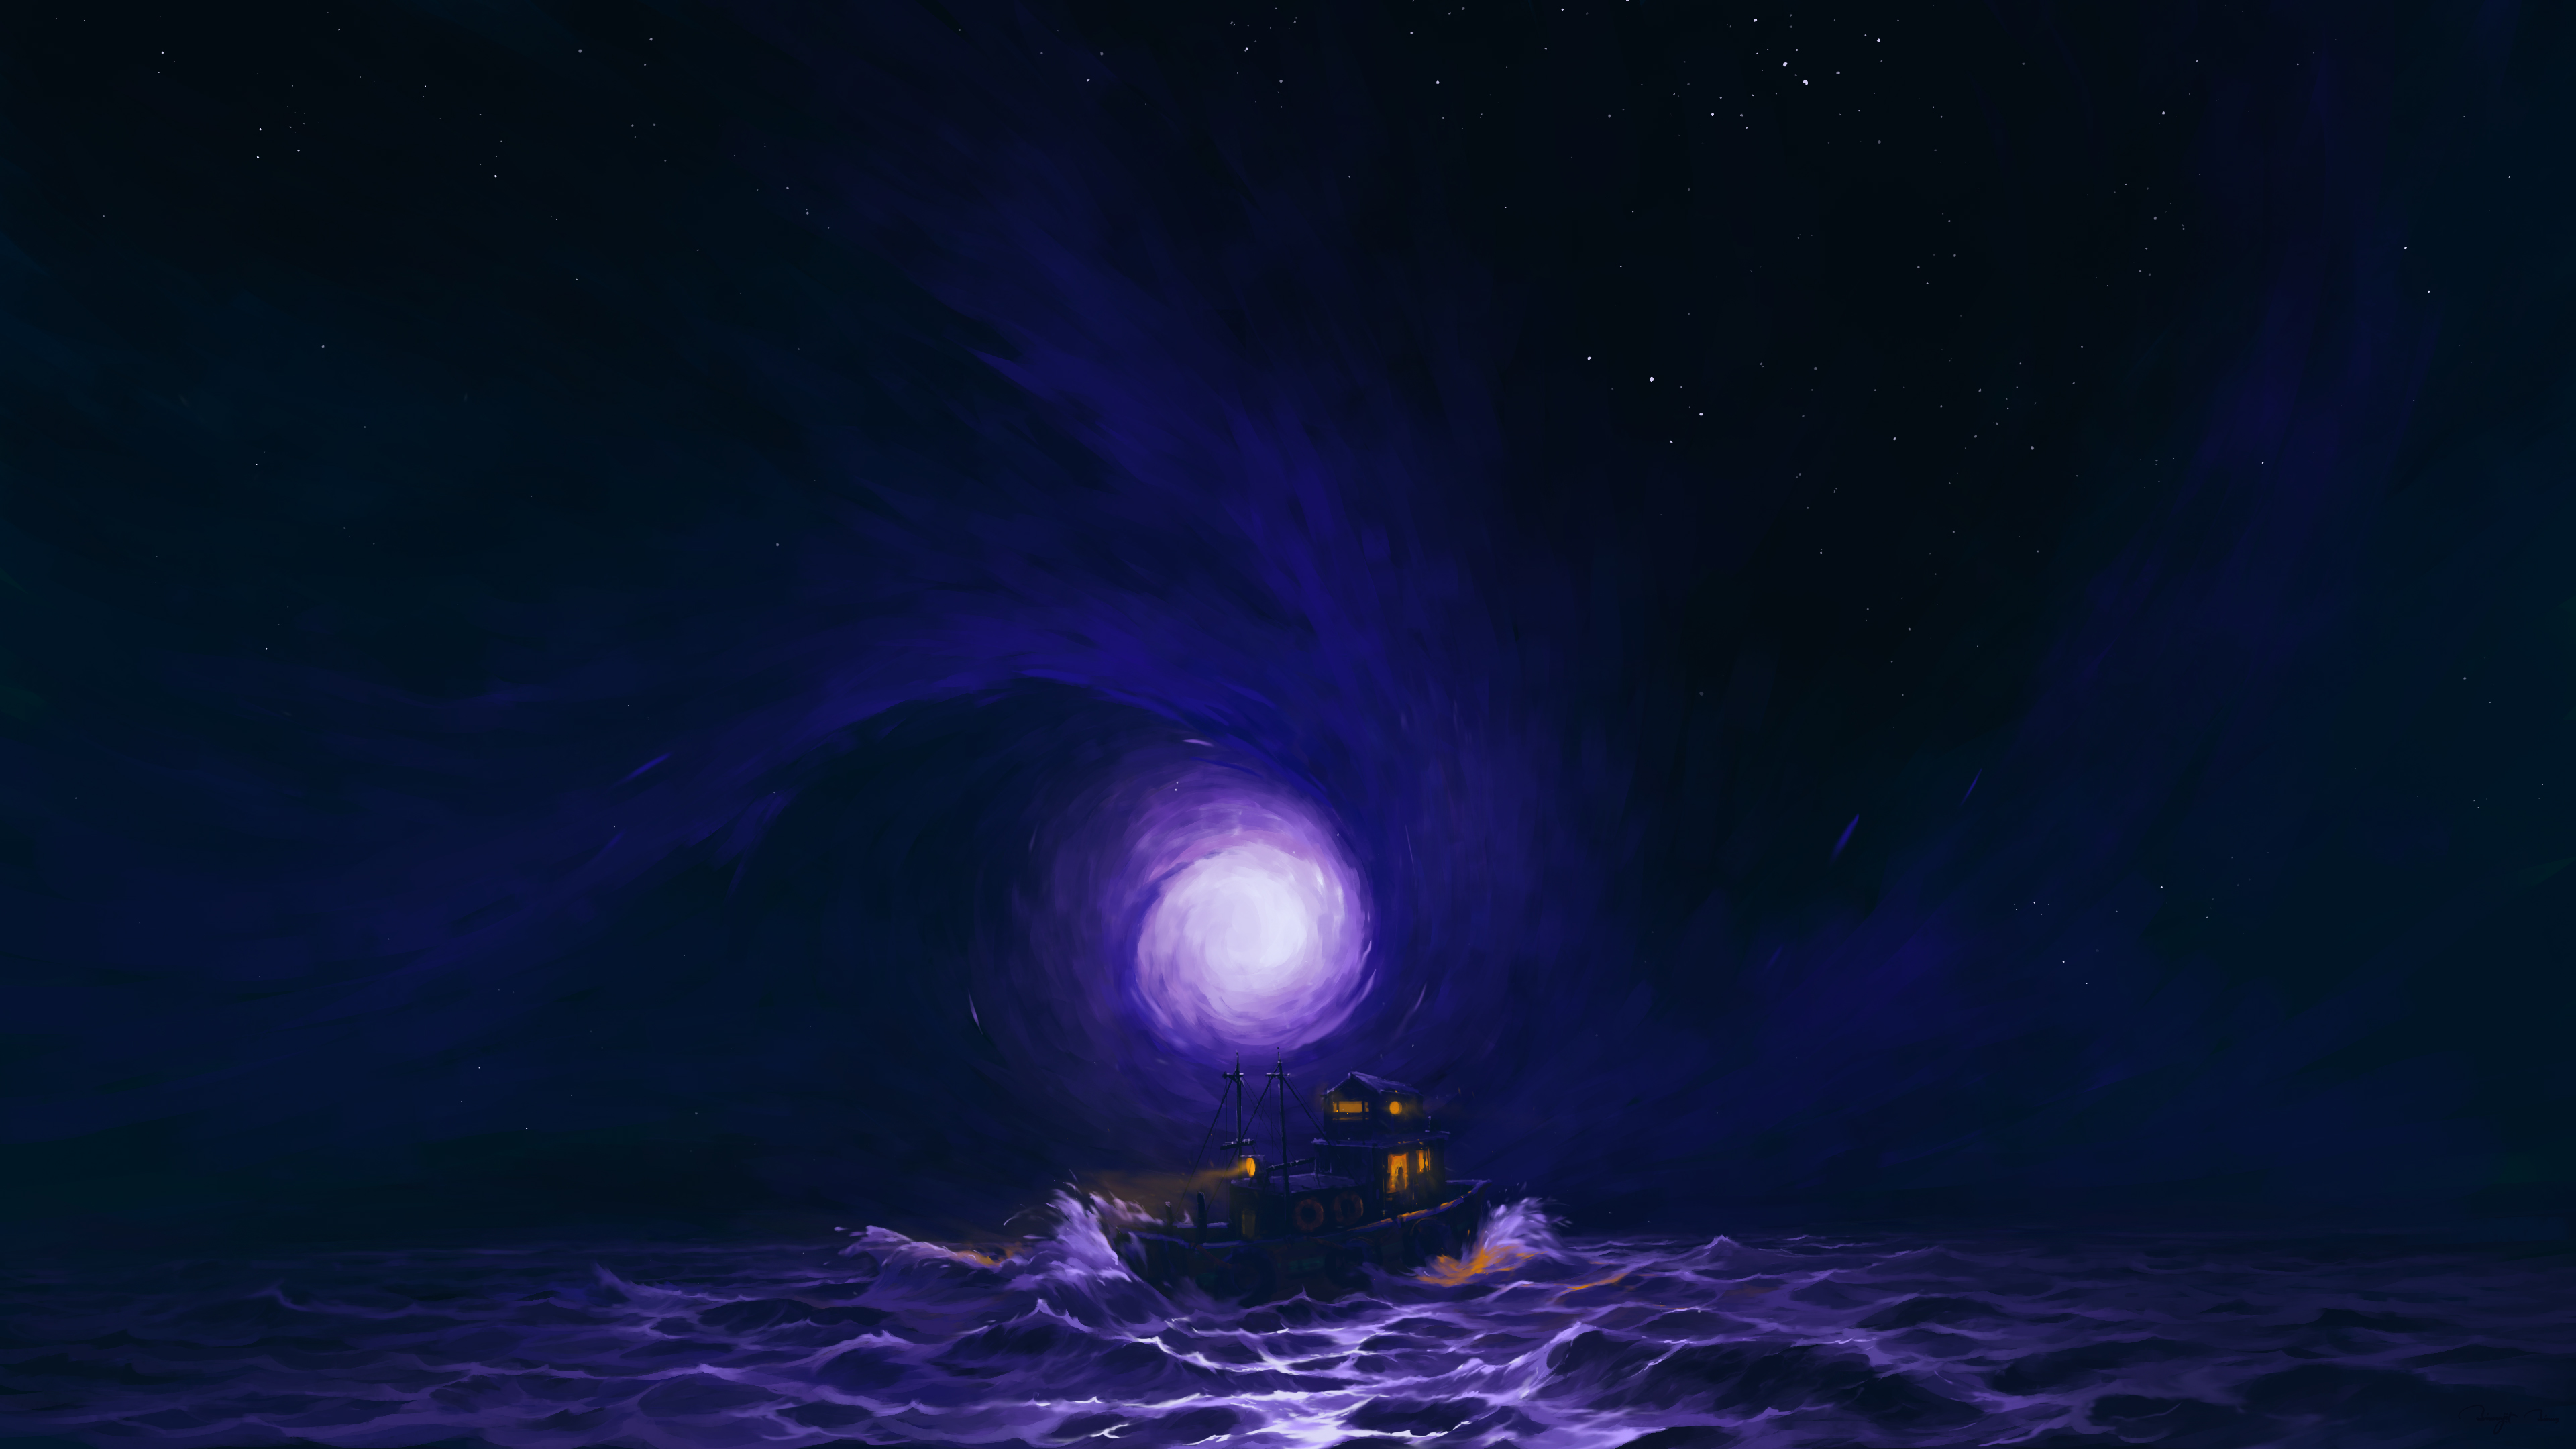 General 3840x2160 BisBiswas digital art artwork illustration landscape nature clouds sea water boat stars Moon lights blue 4K night nightscape